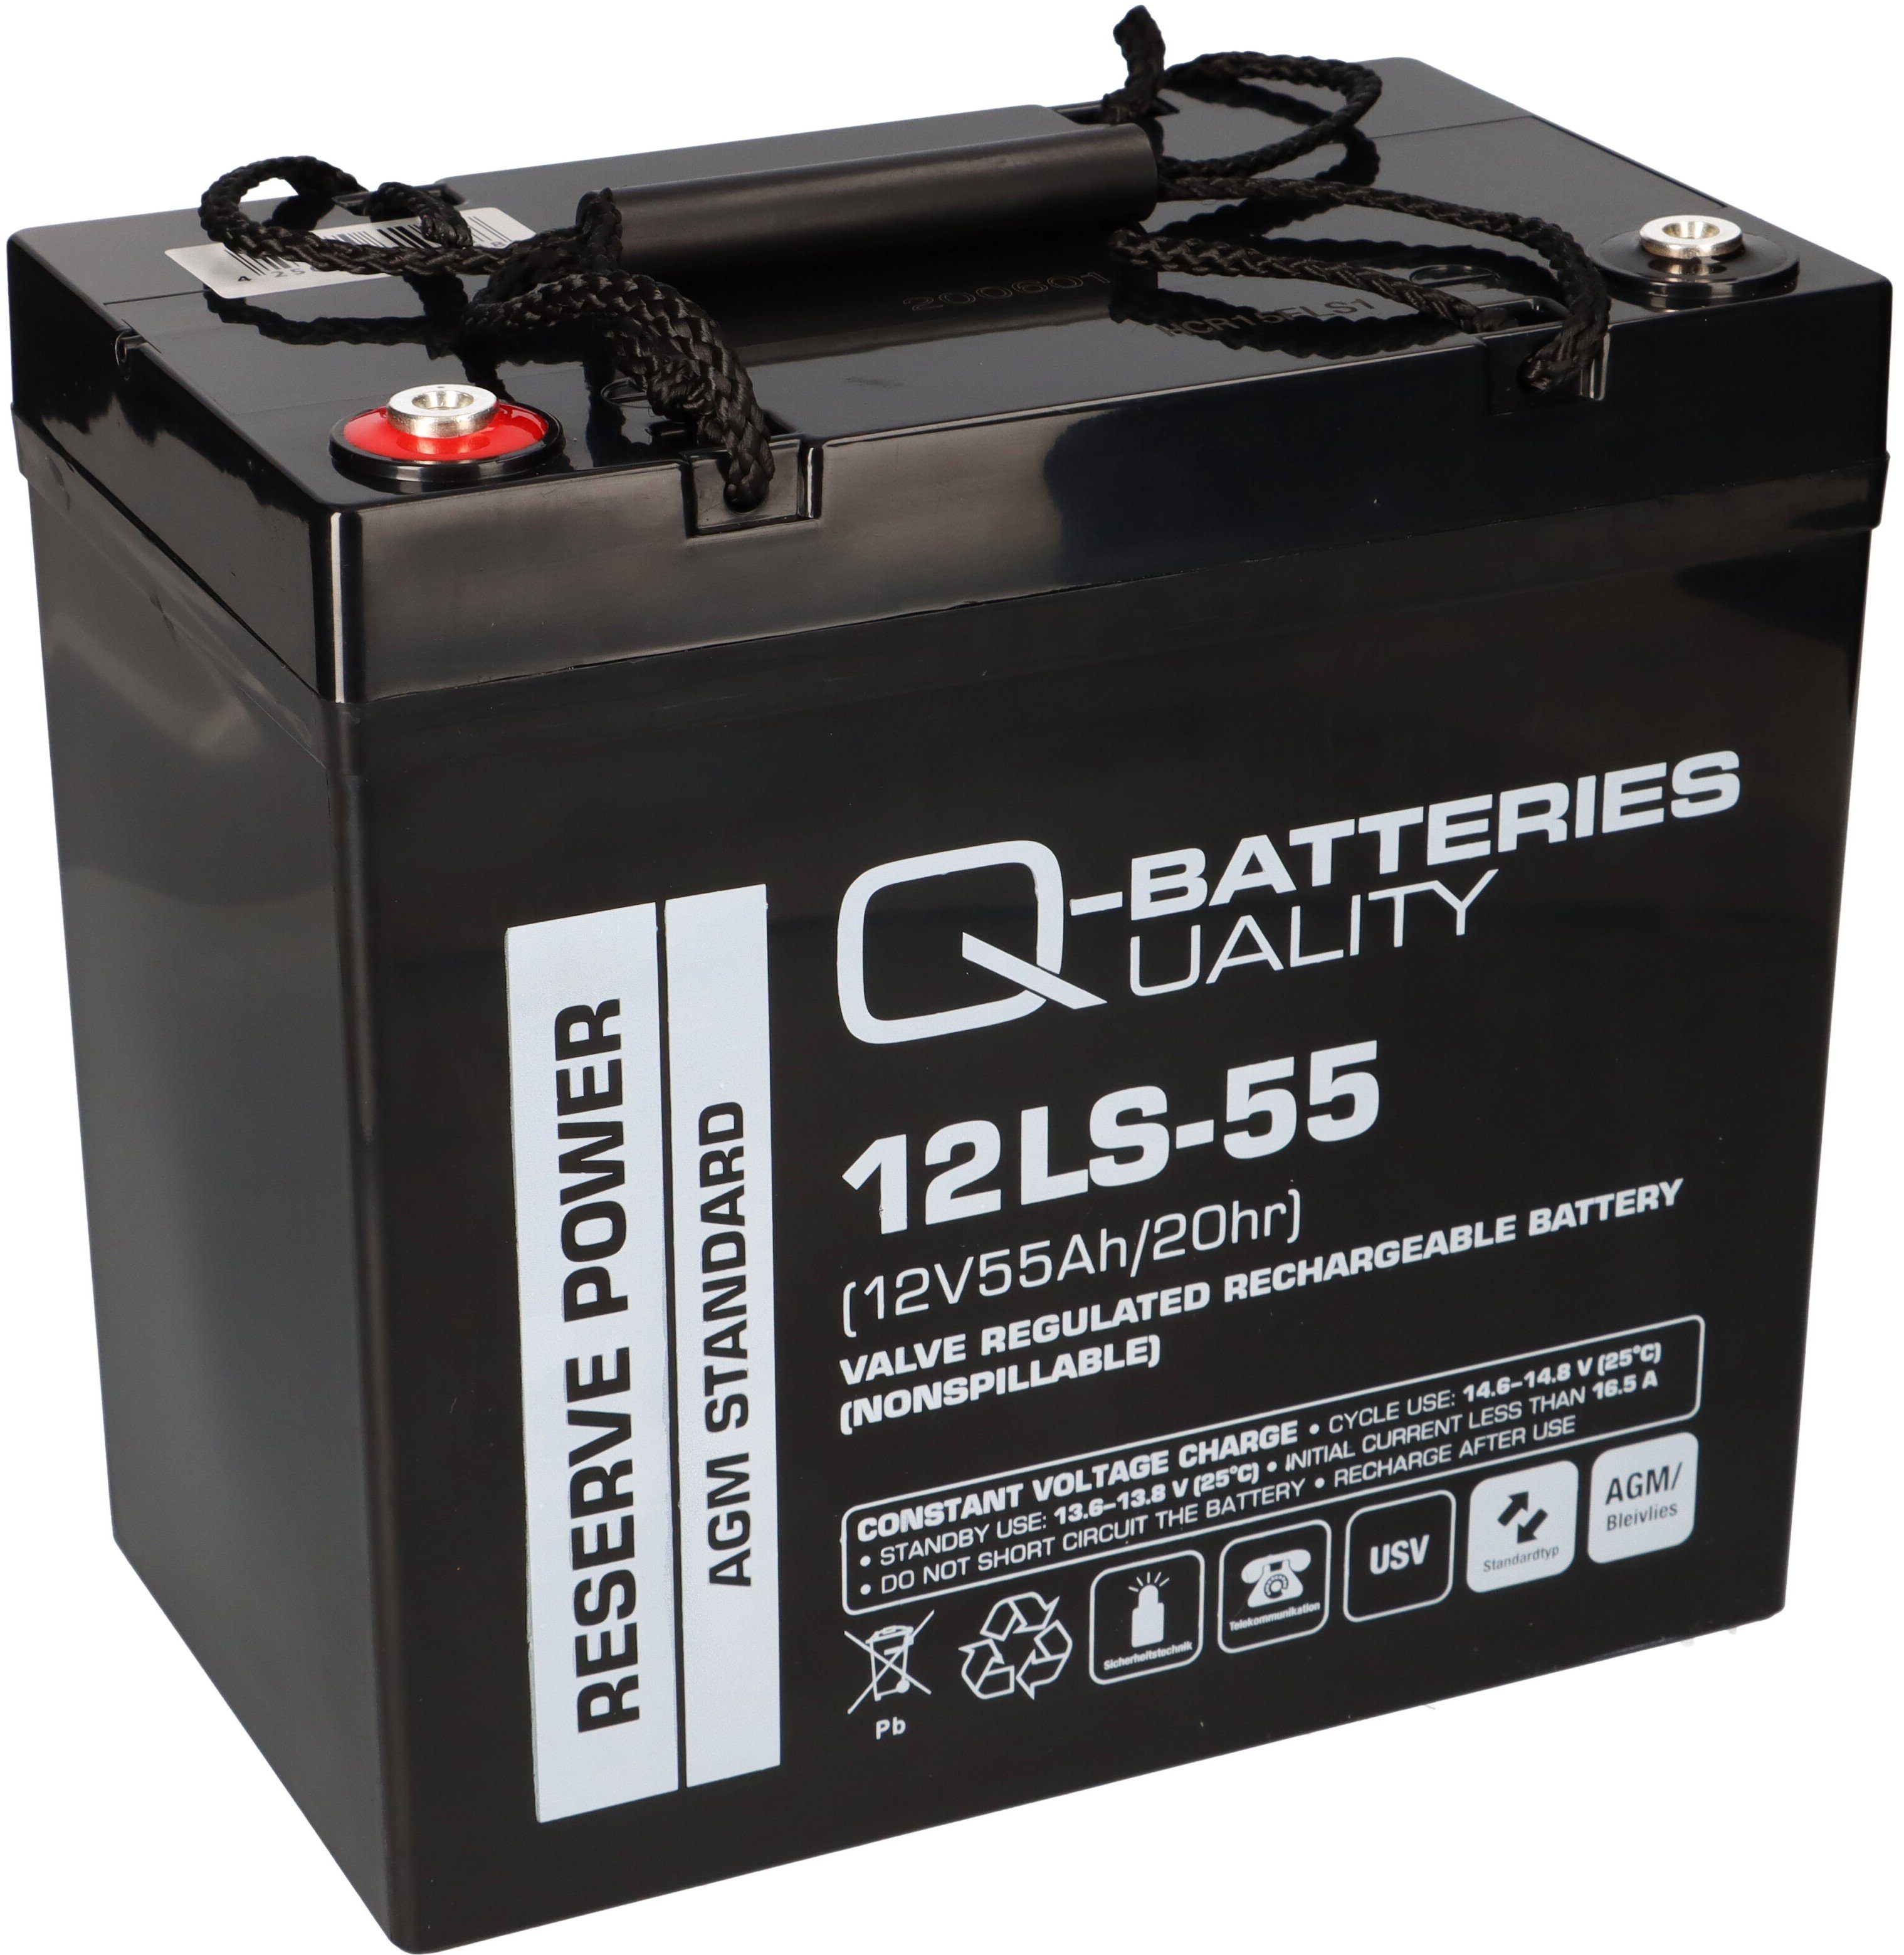 Q-Batteries Q-Batteries 12LS-55 / 12V Standard-Typ 10 55Ah - Bleiakkus Blei Akku AGM VRLA